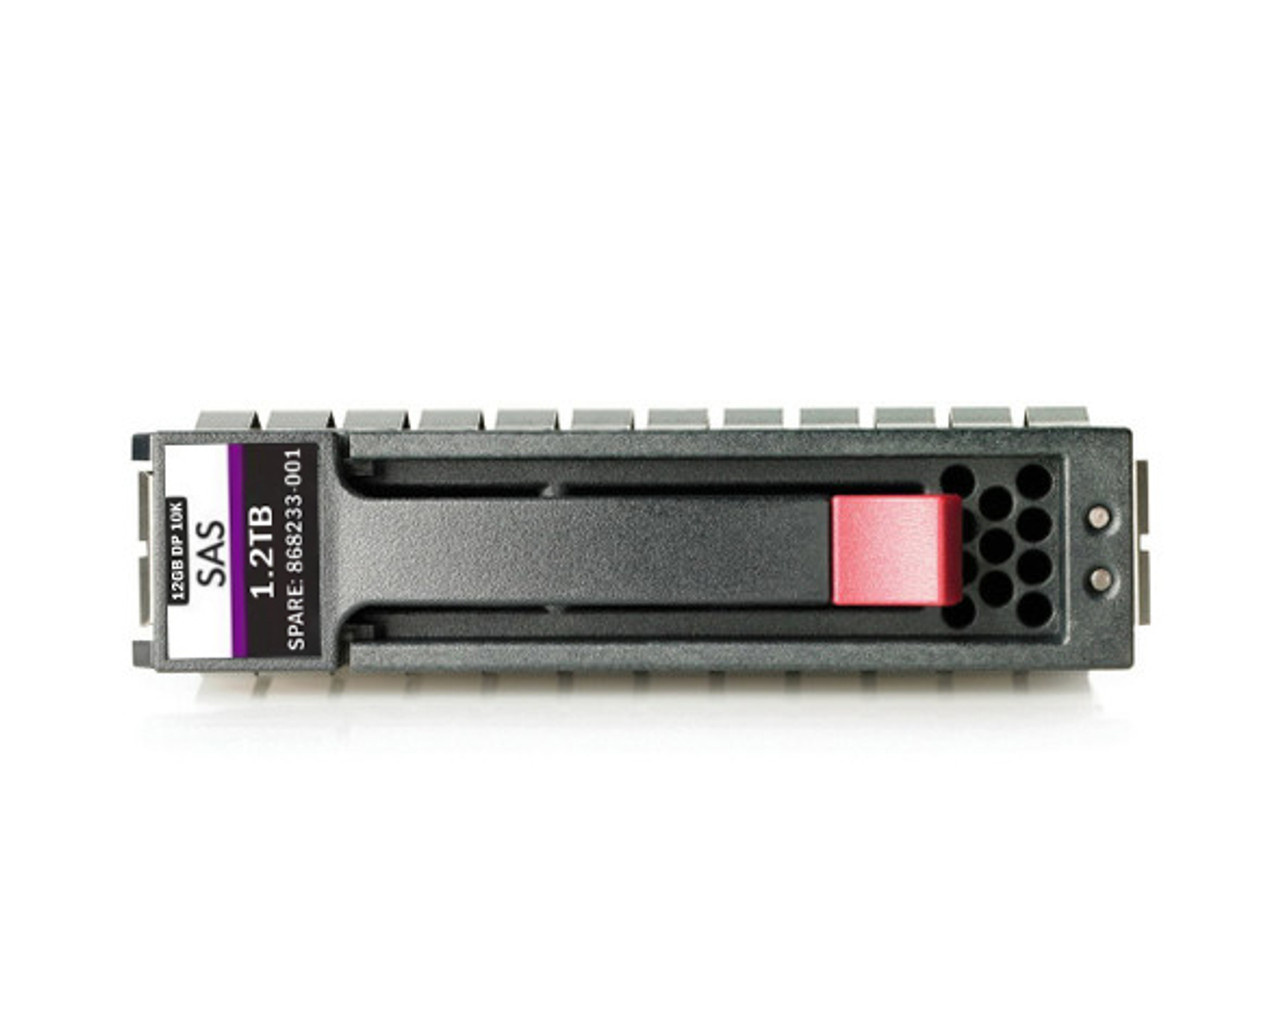 HPE MSA P9M81A 1.2TB 10kRPM 2.5in SAS-12G SED Enterprise HDD